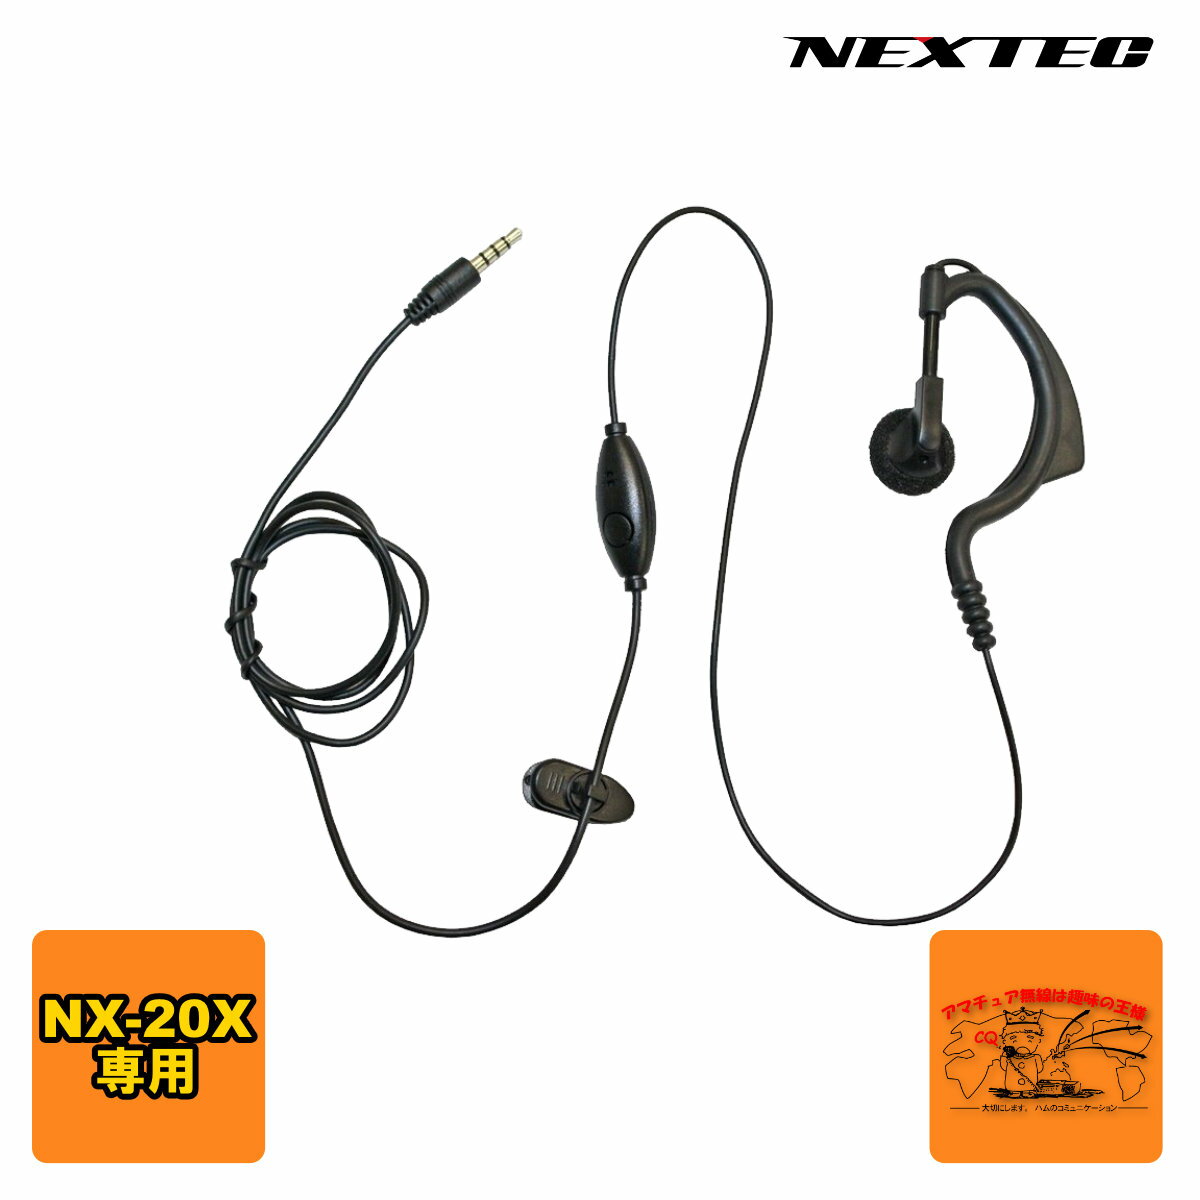 NX-20EH NEXTECH NX-20X / NX-20R用イヤホンマイク 耳掛け式 1本